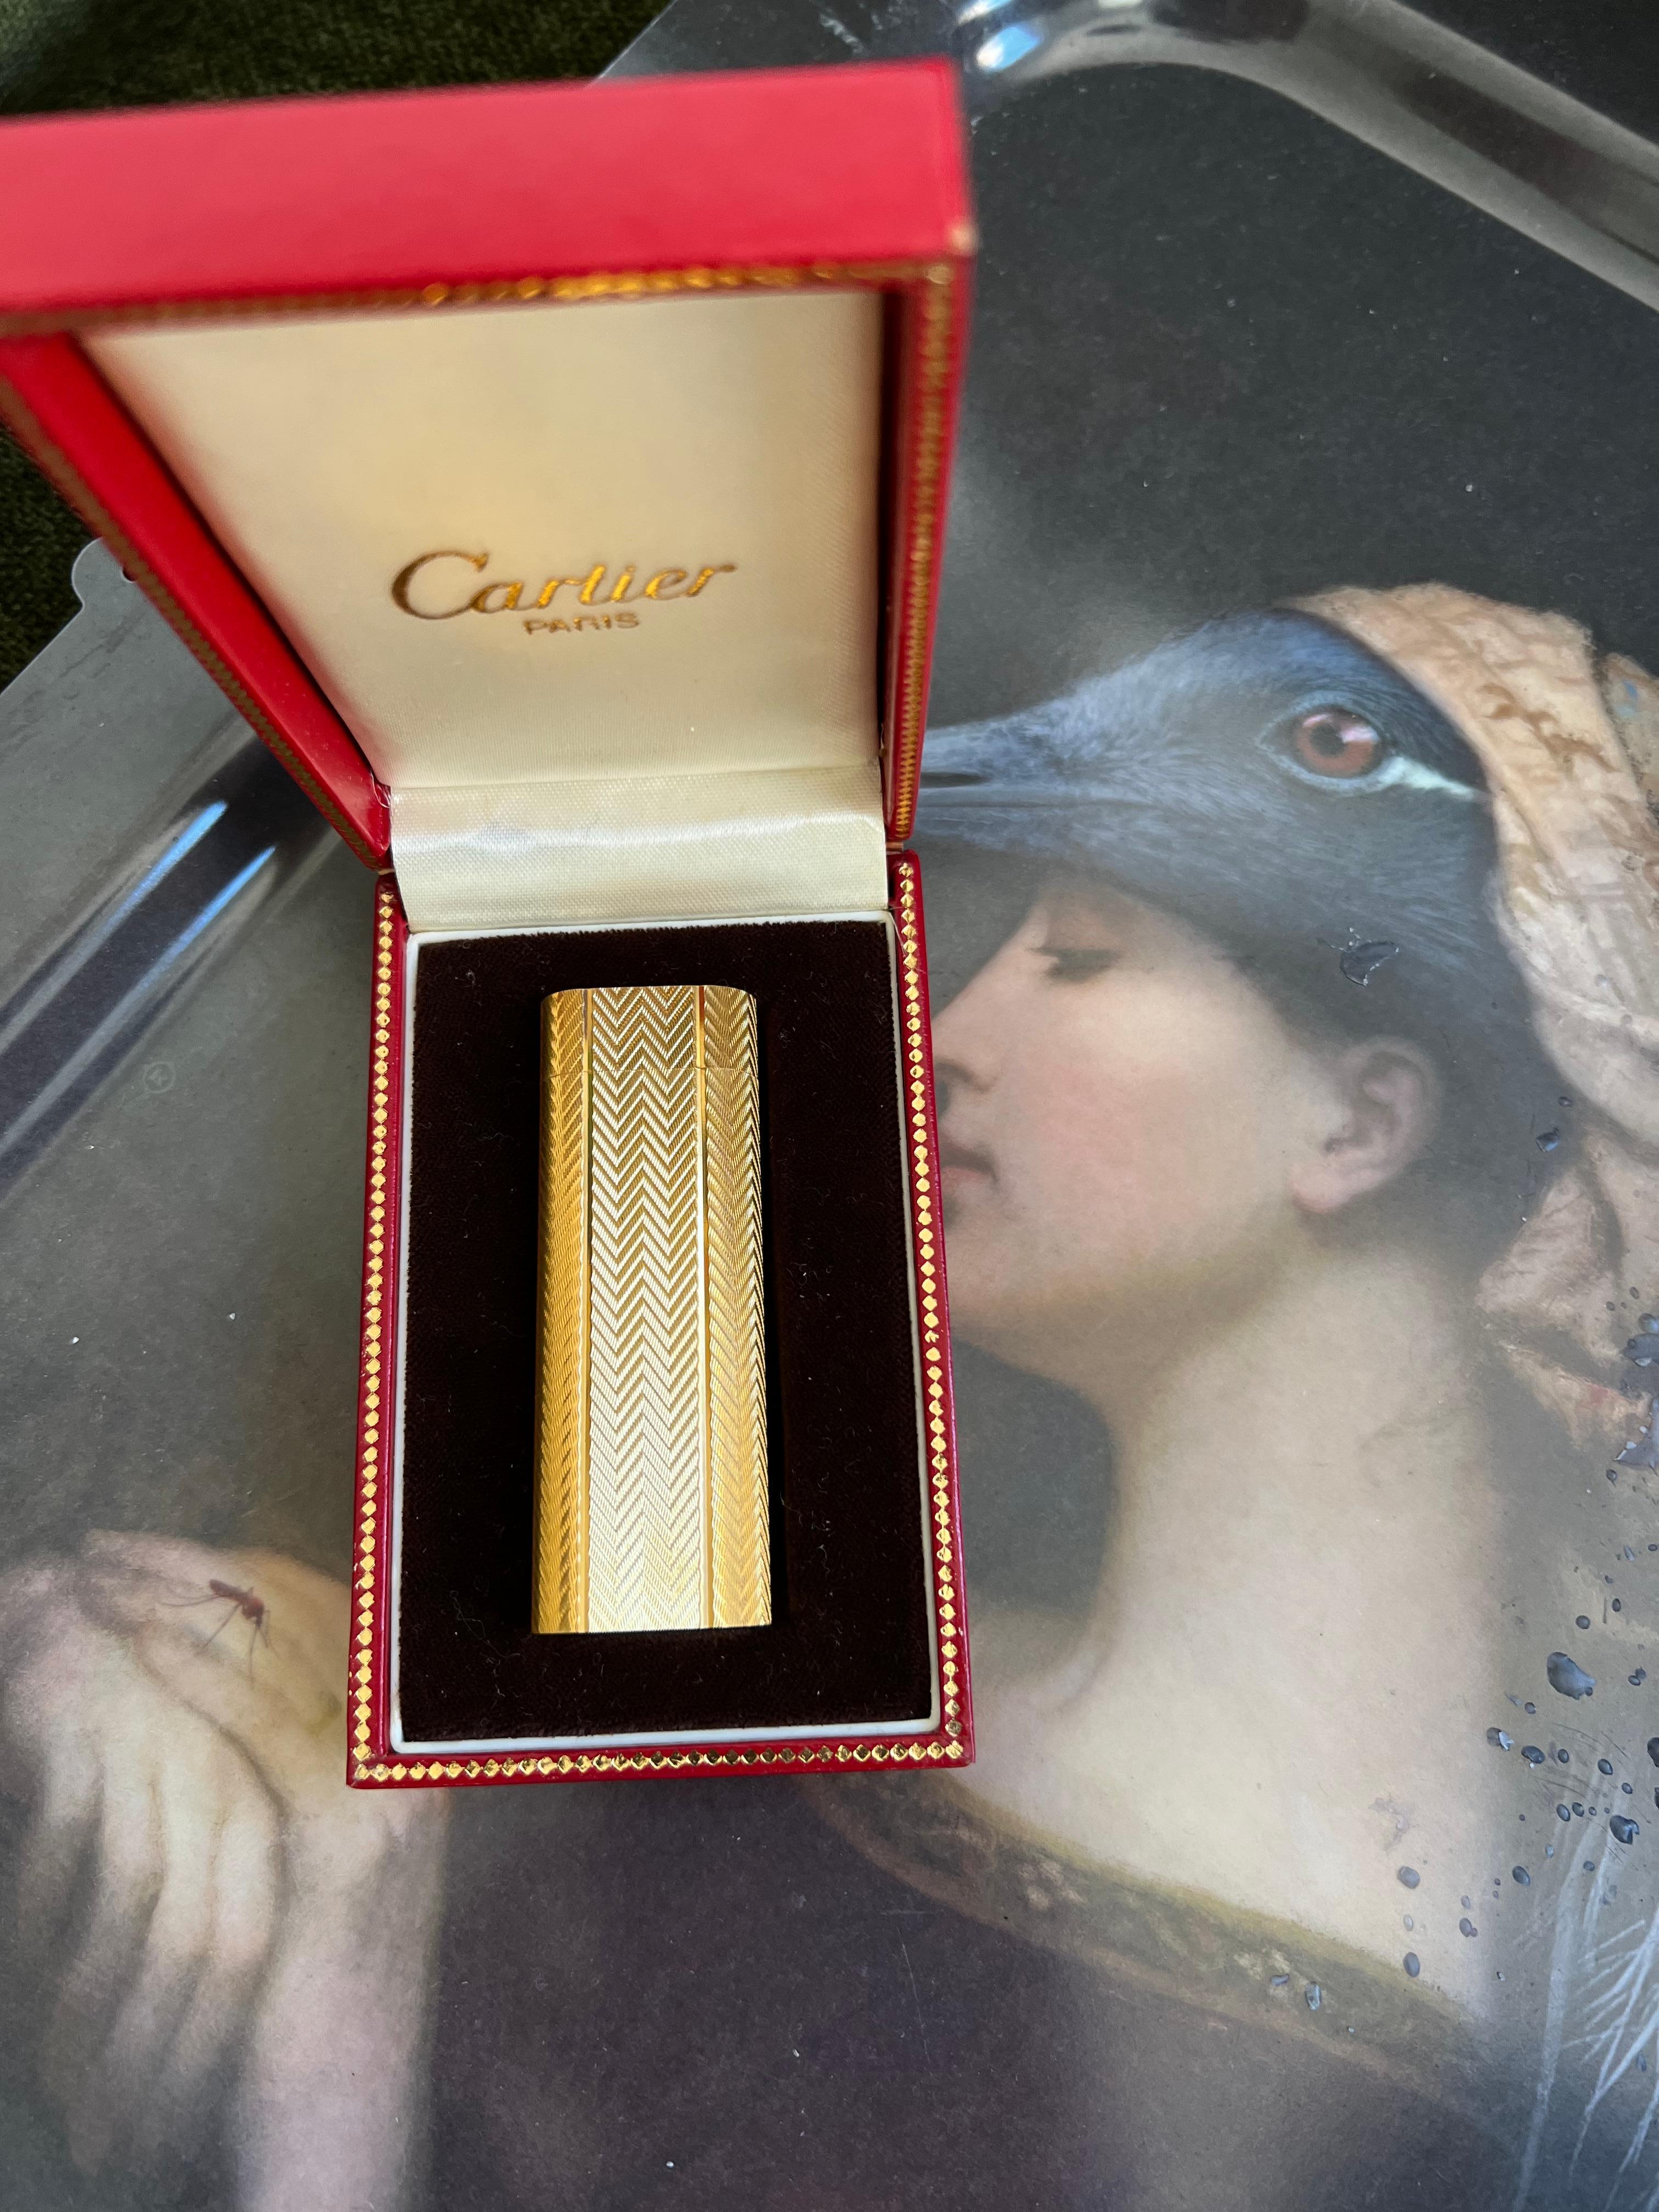 Les Must de Cartier Paris 18k Gold Plated Lighter 1